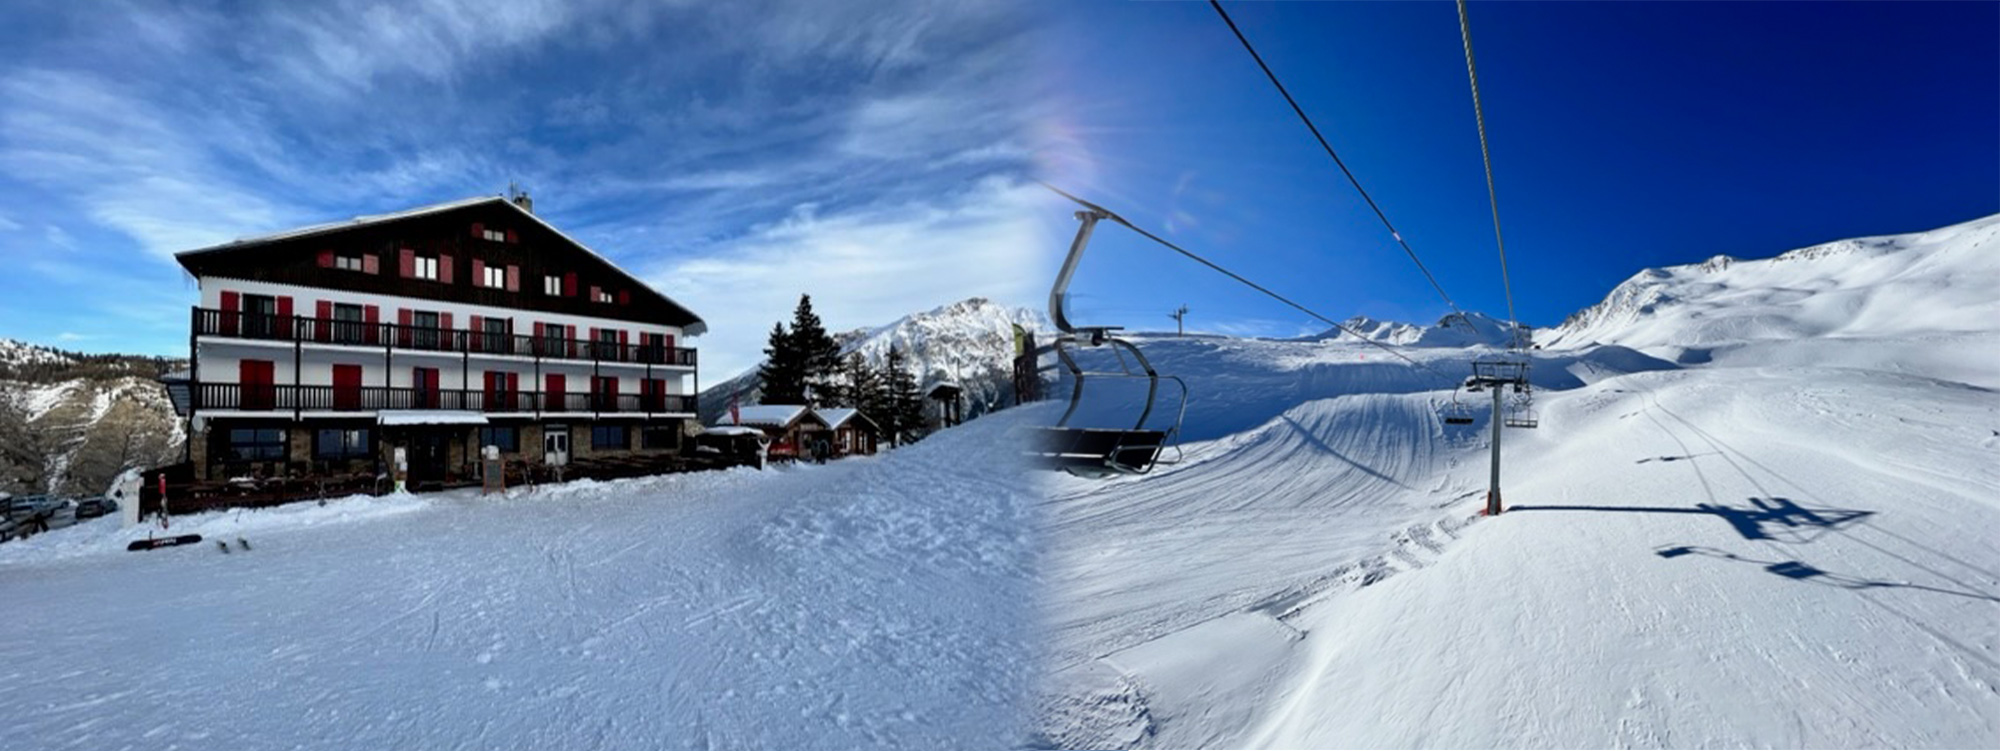 chalet-sainte-anne-piste-de-ski-telesiege